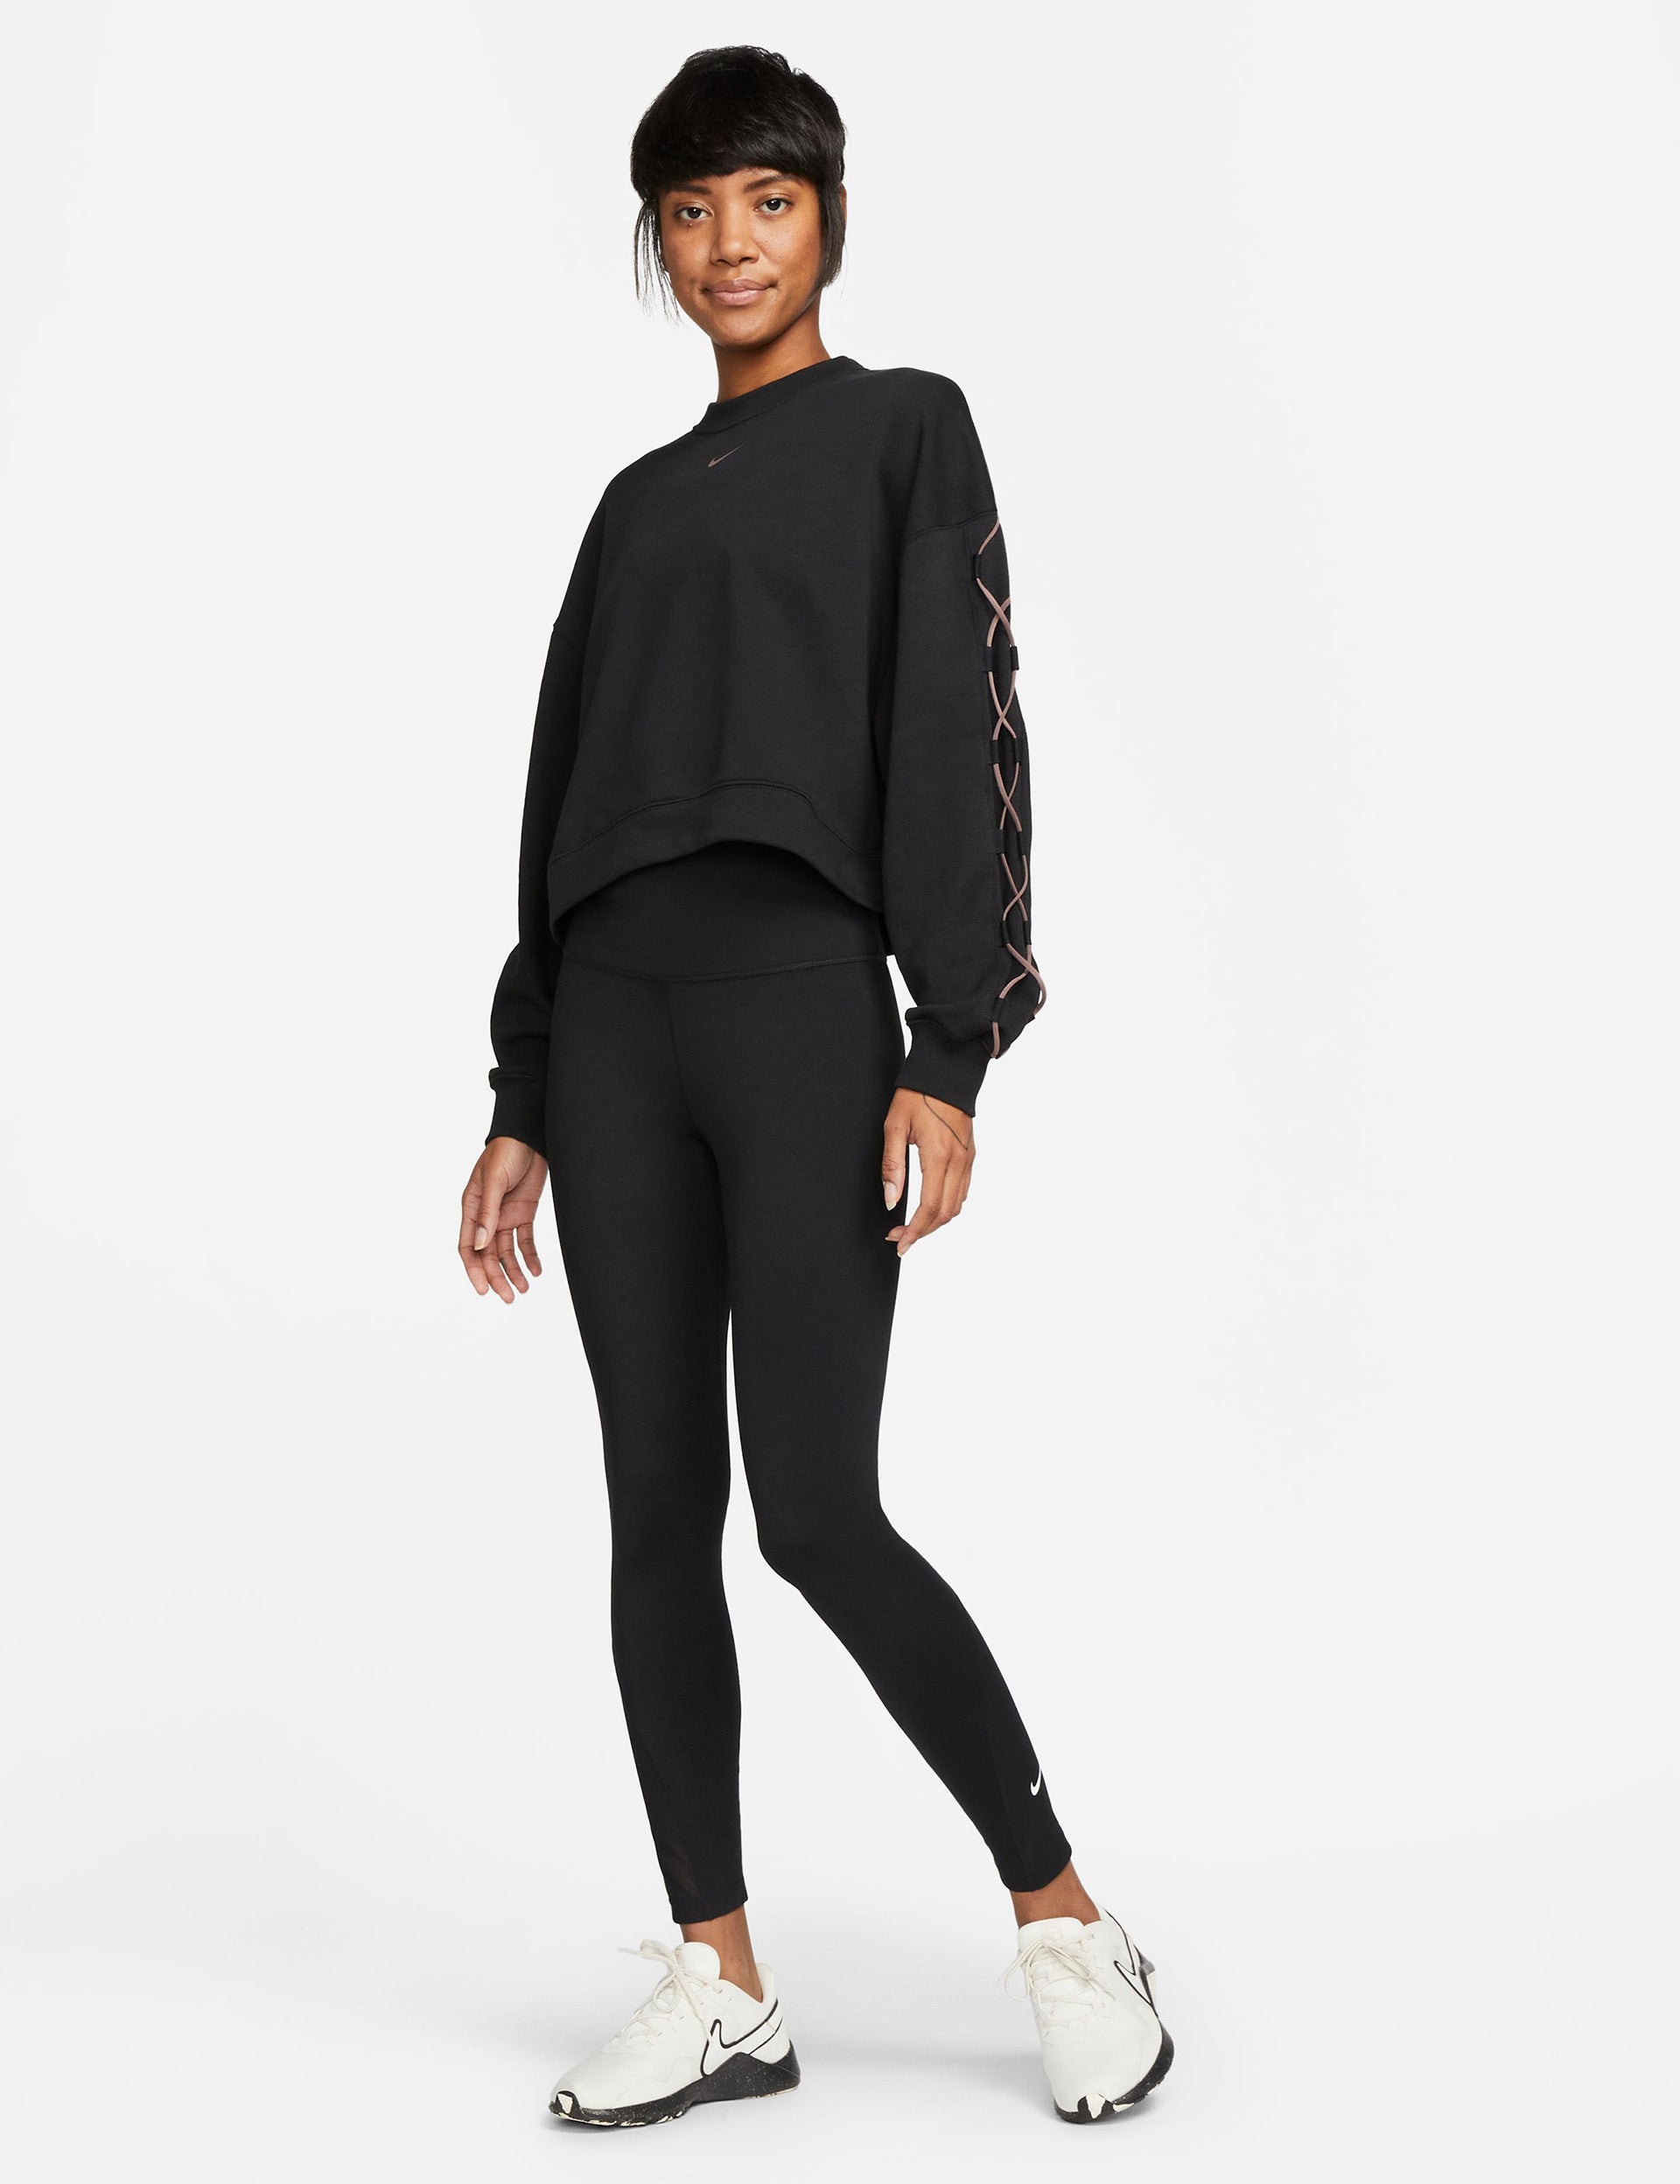 Nike | Get Lace-Up Sweatshirt - Black | The Sports Edit